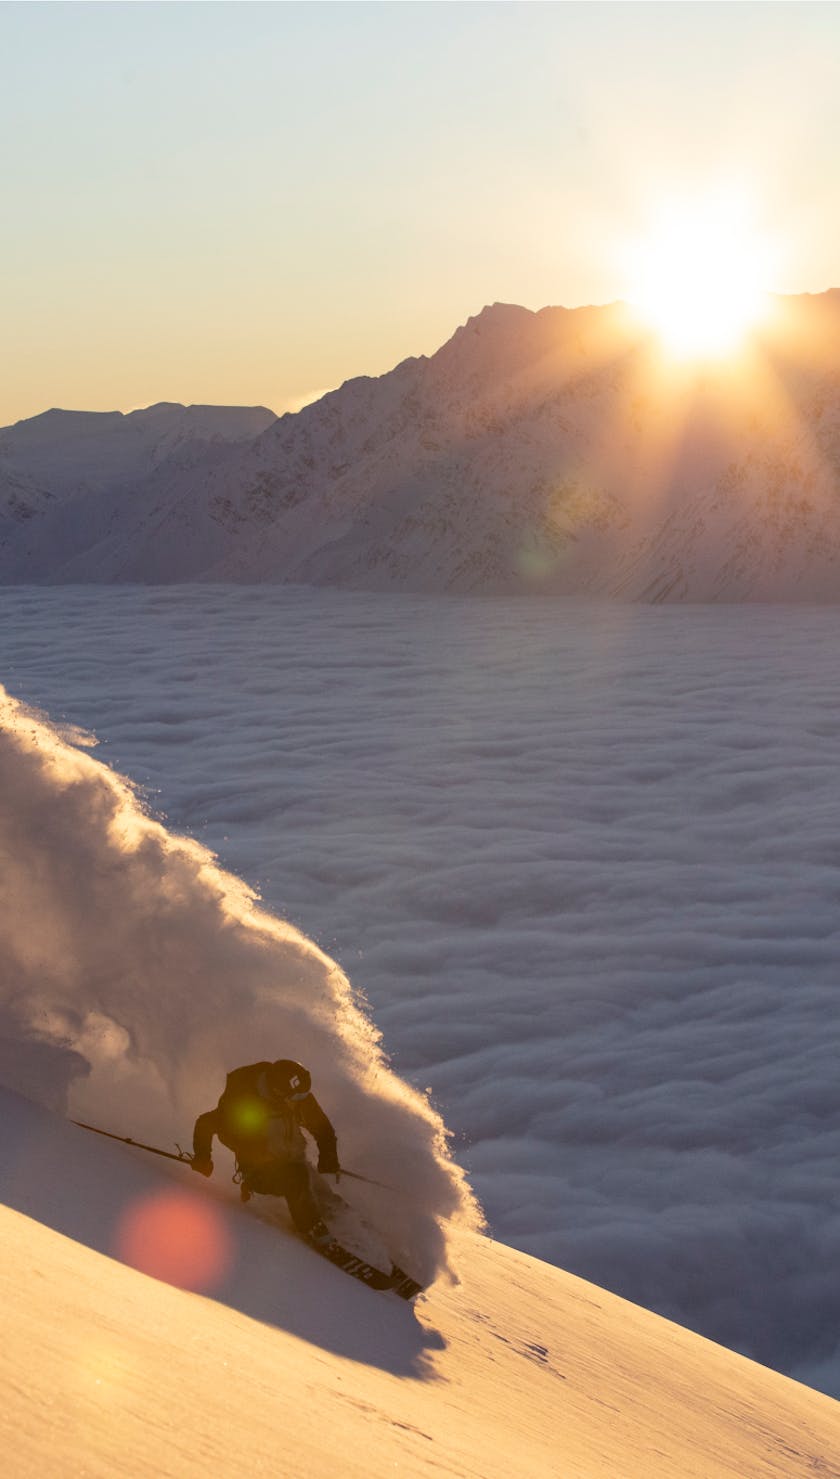 Dawn patrol skier descending the mountain as the sun rises.